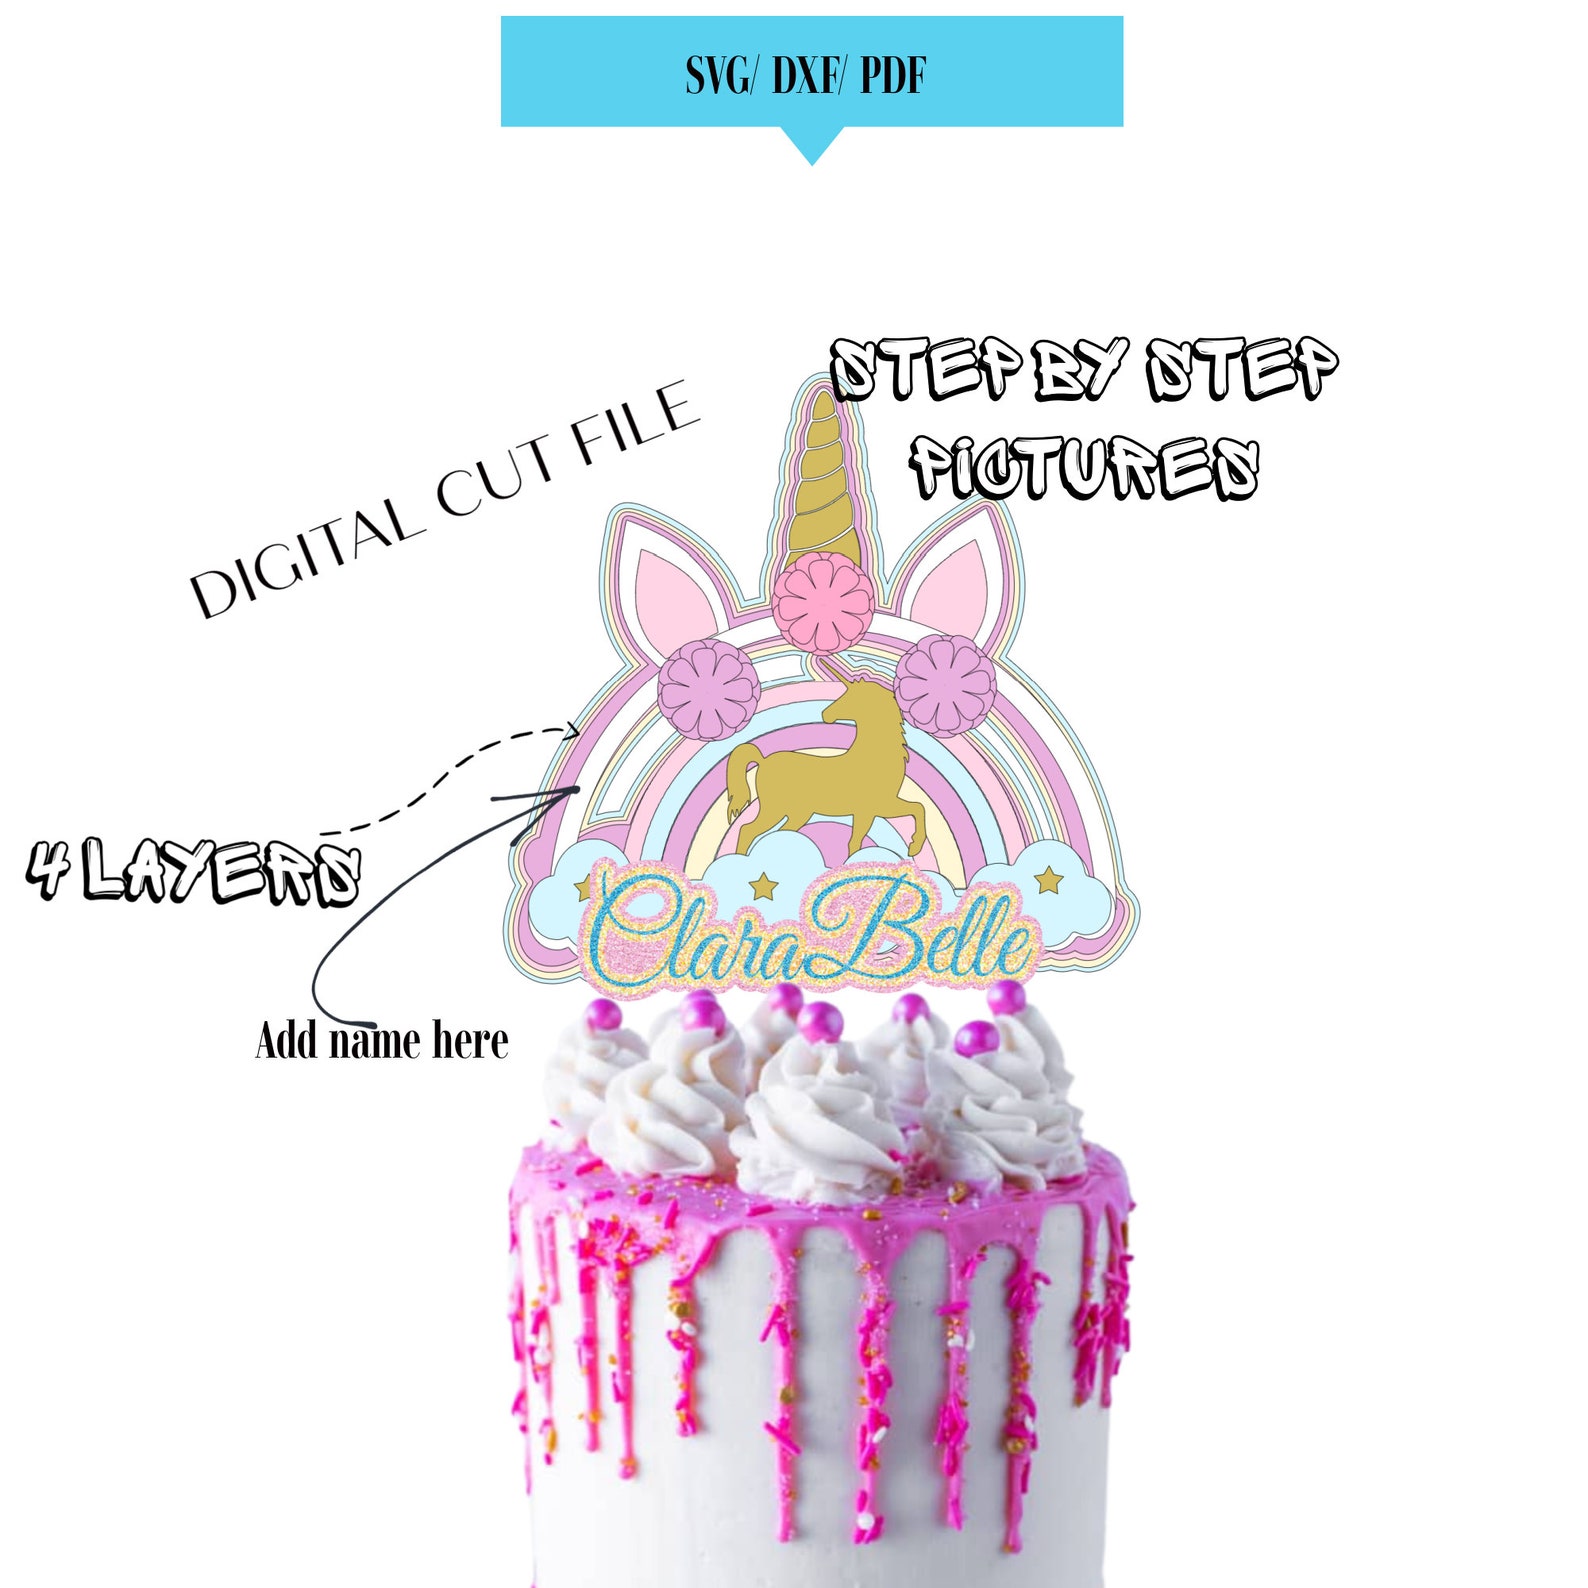 Unicorn Cake Topper SVG Unicorn Topper Instant Download File | Etsy Ireland